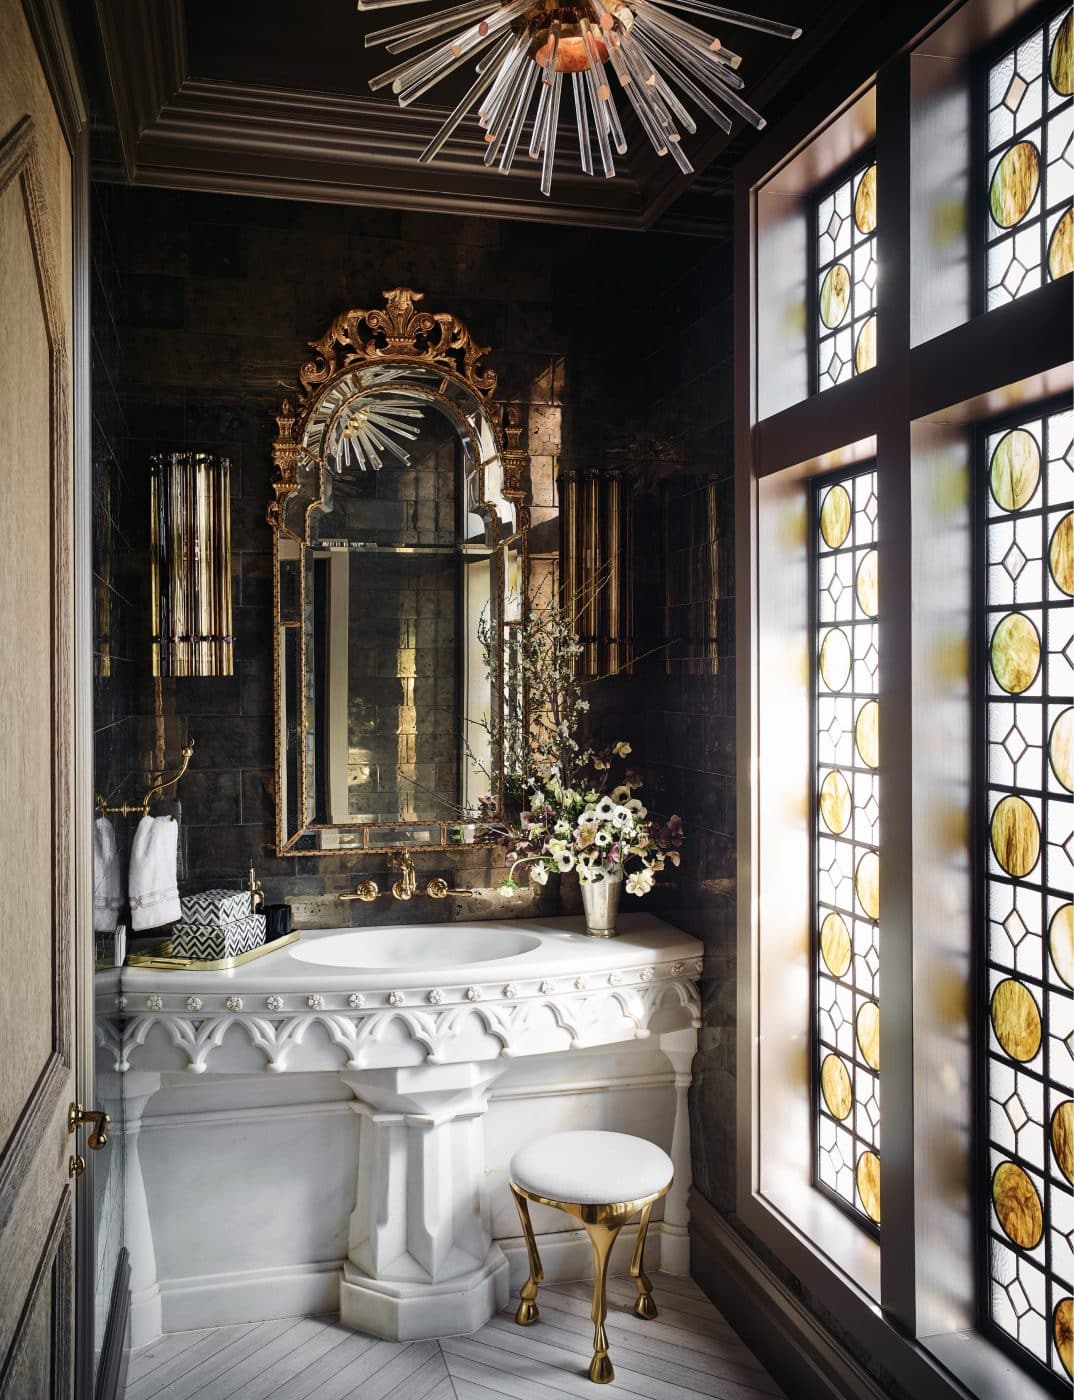 Barbara Sallick Rizzoli book The Ultimate Bath interior designer Ken Fulk bathroom